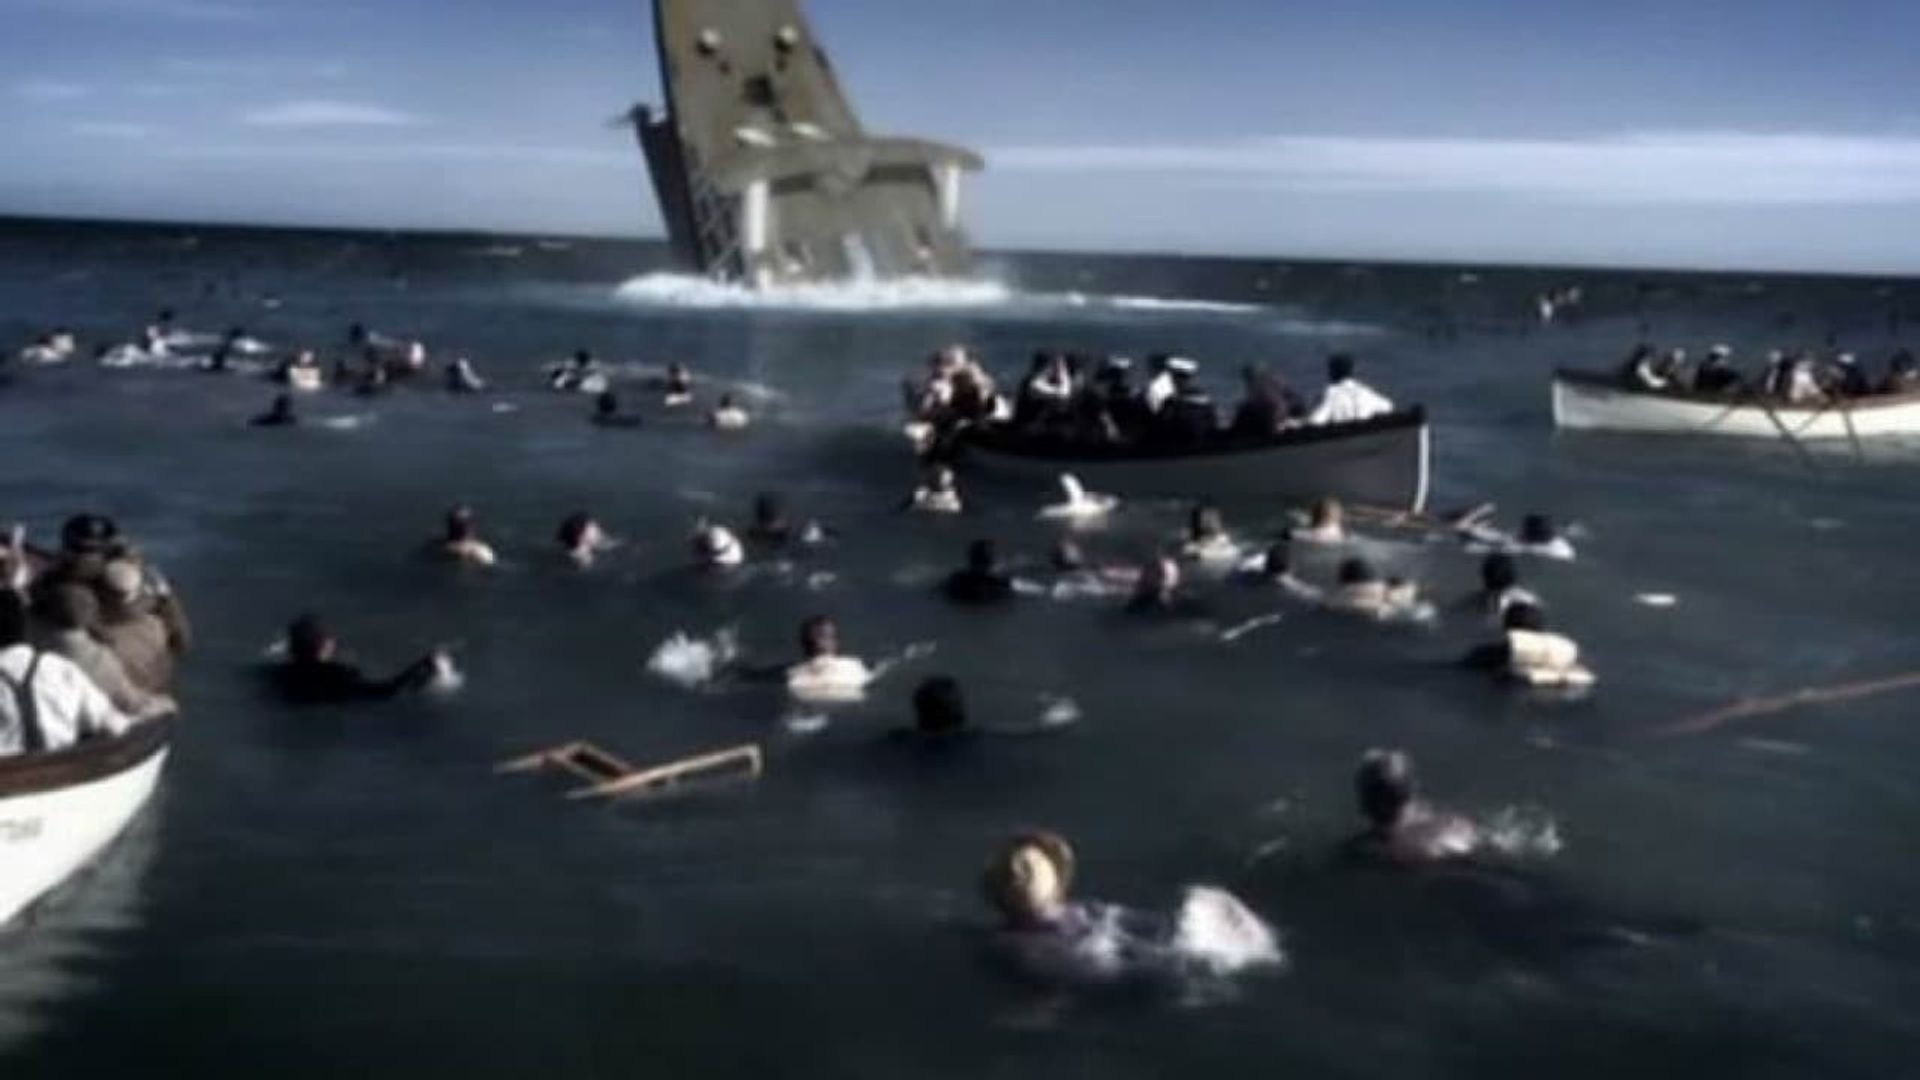 Sinking of the Lusitania: Terror at Sea background